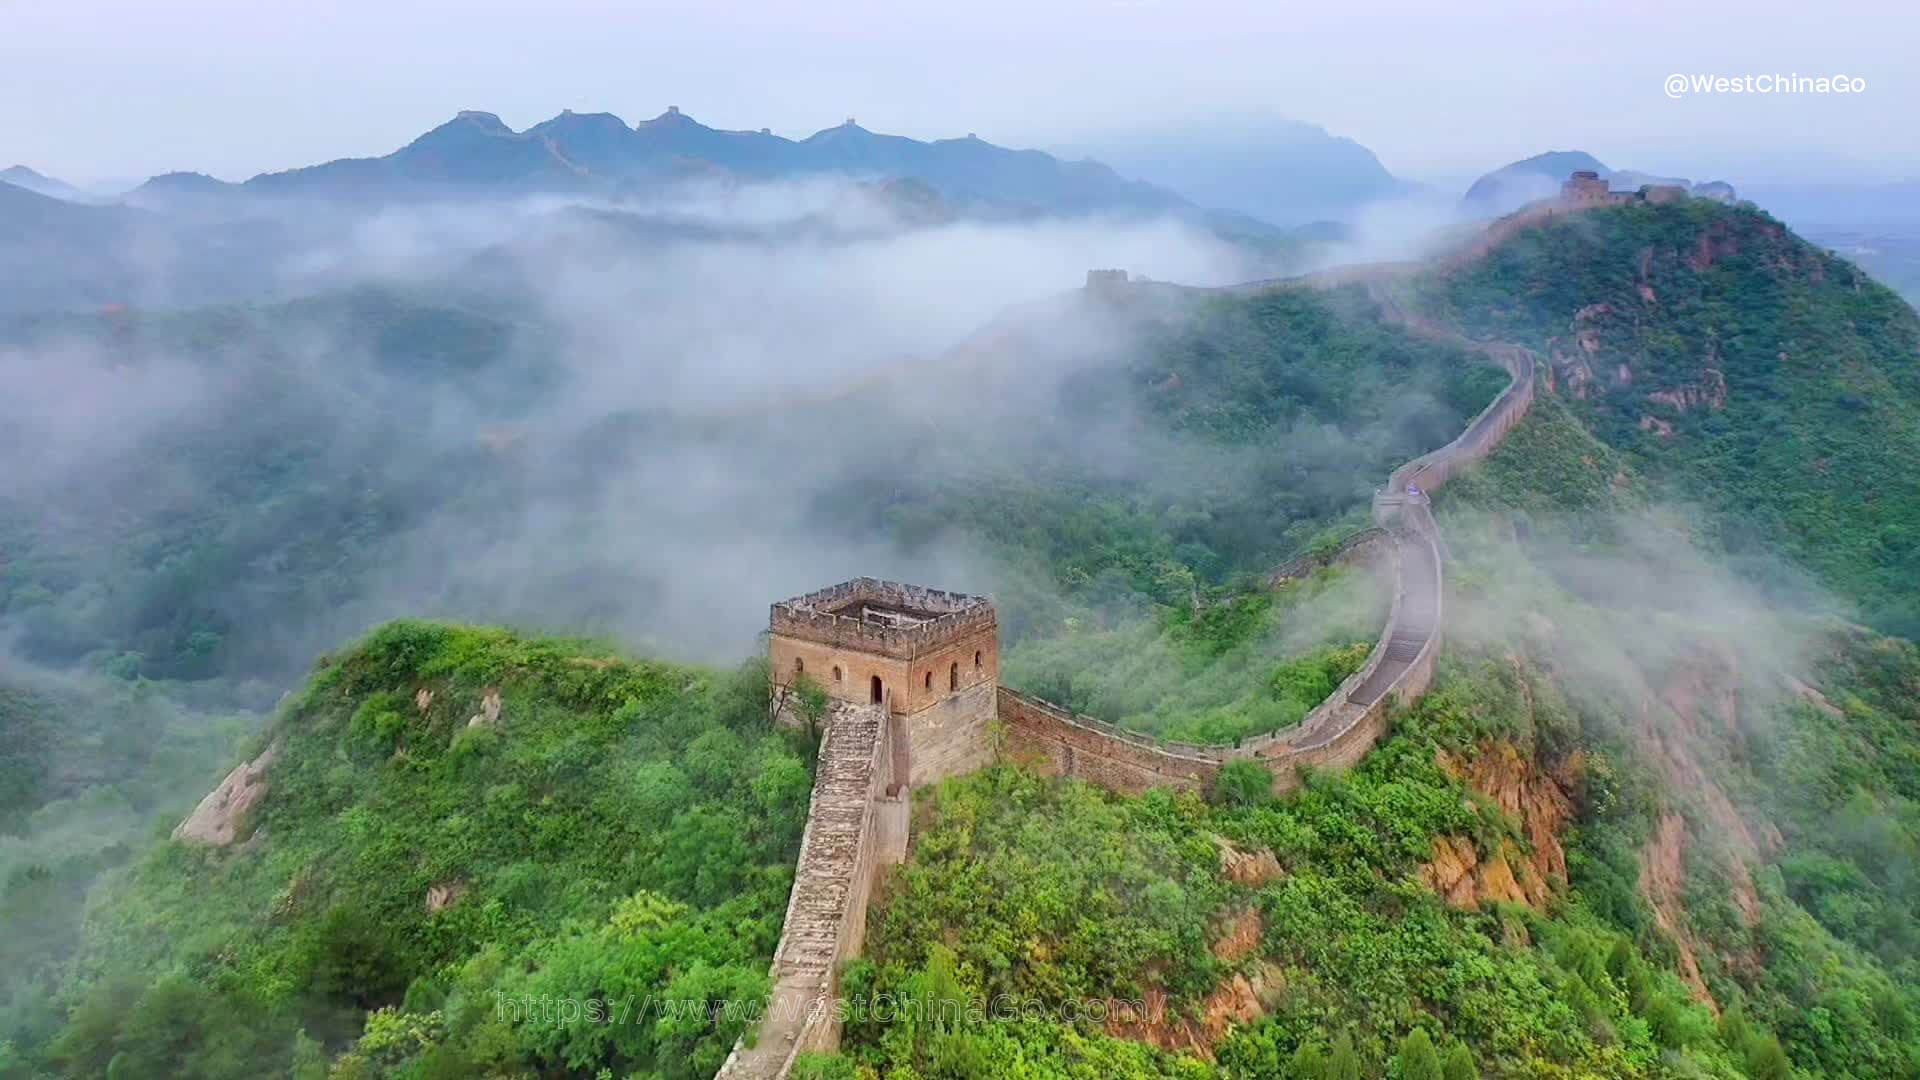 Beijing Jinshanling Great Wall